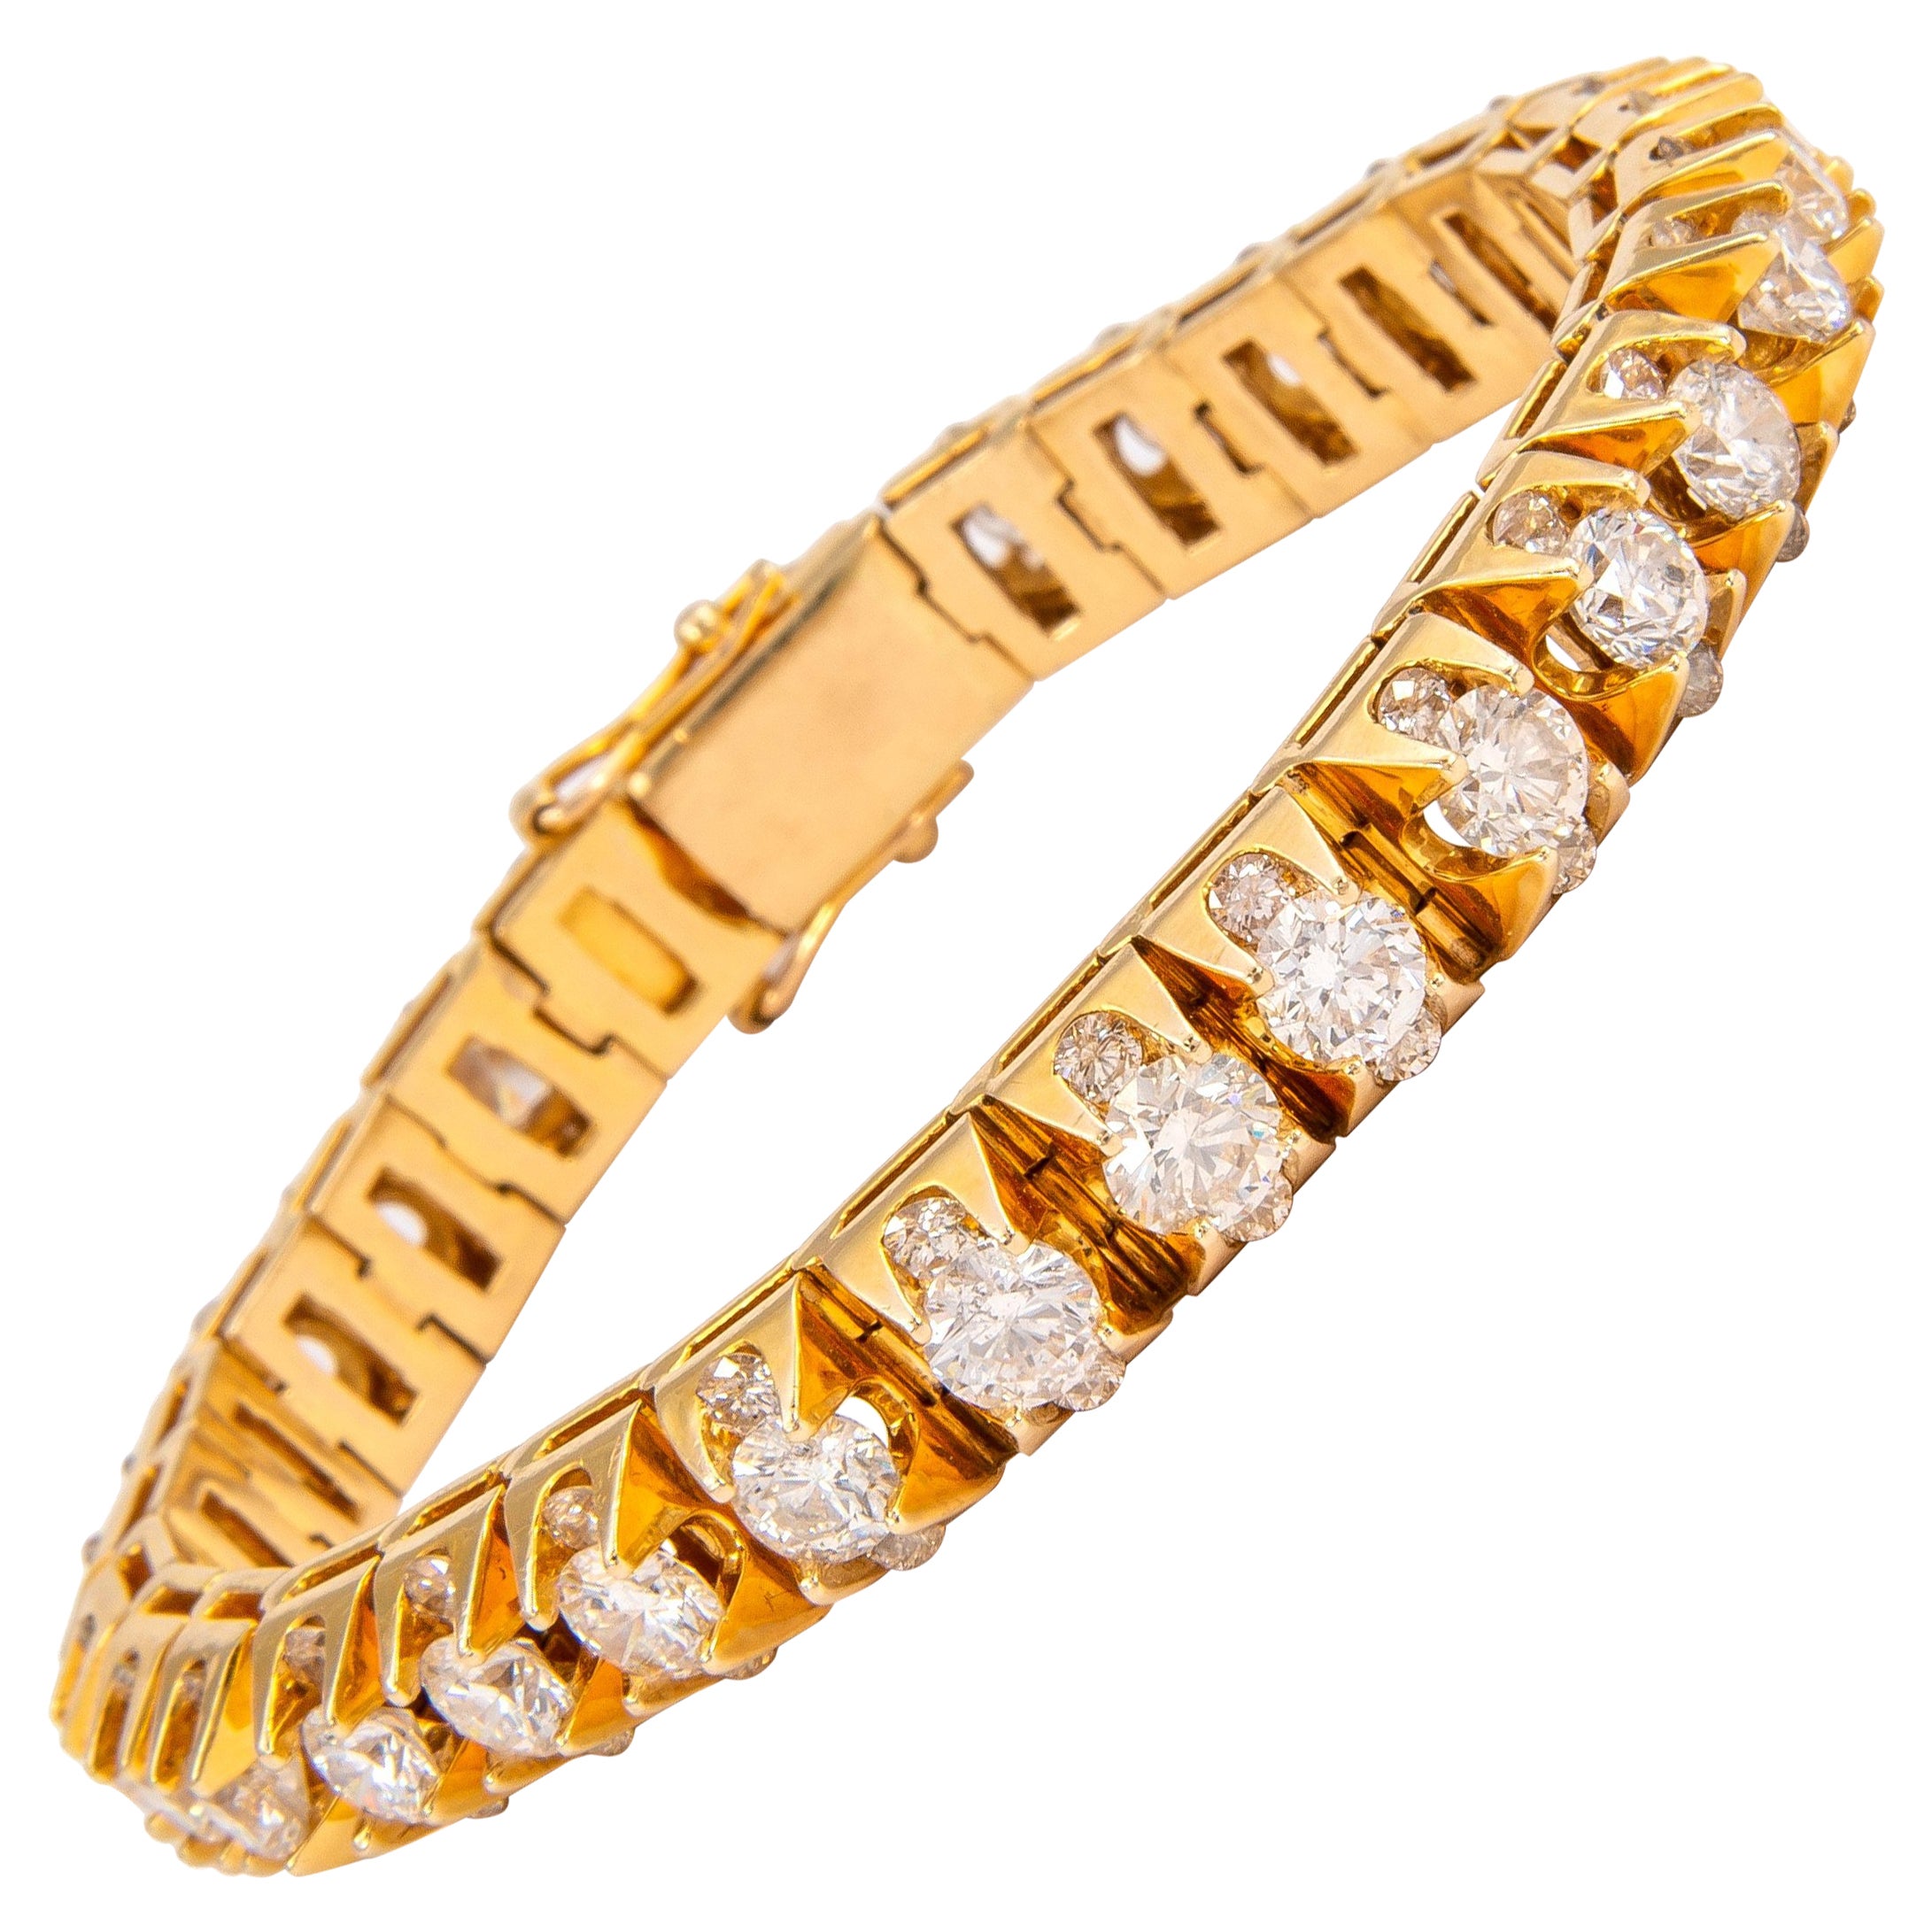 Estate / Vintage Apx 20.05 Carats Diamond Bracelet Yellow Gold